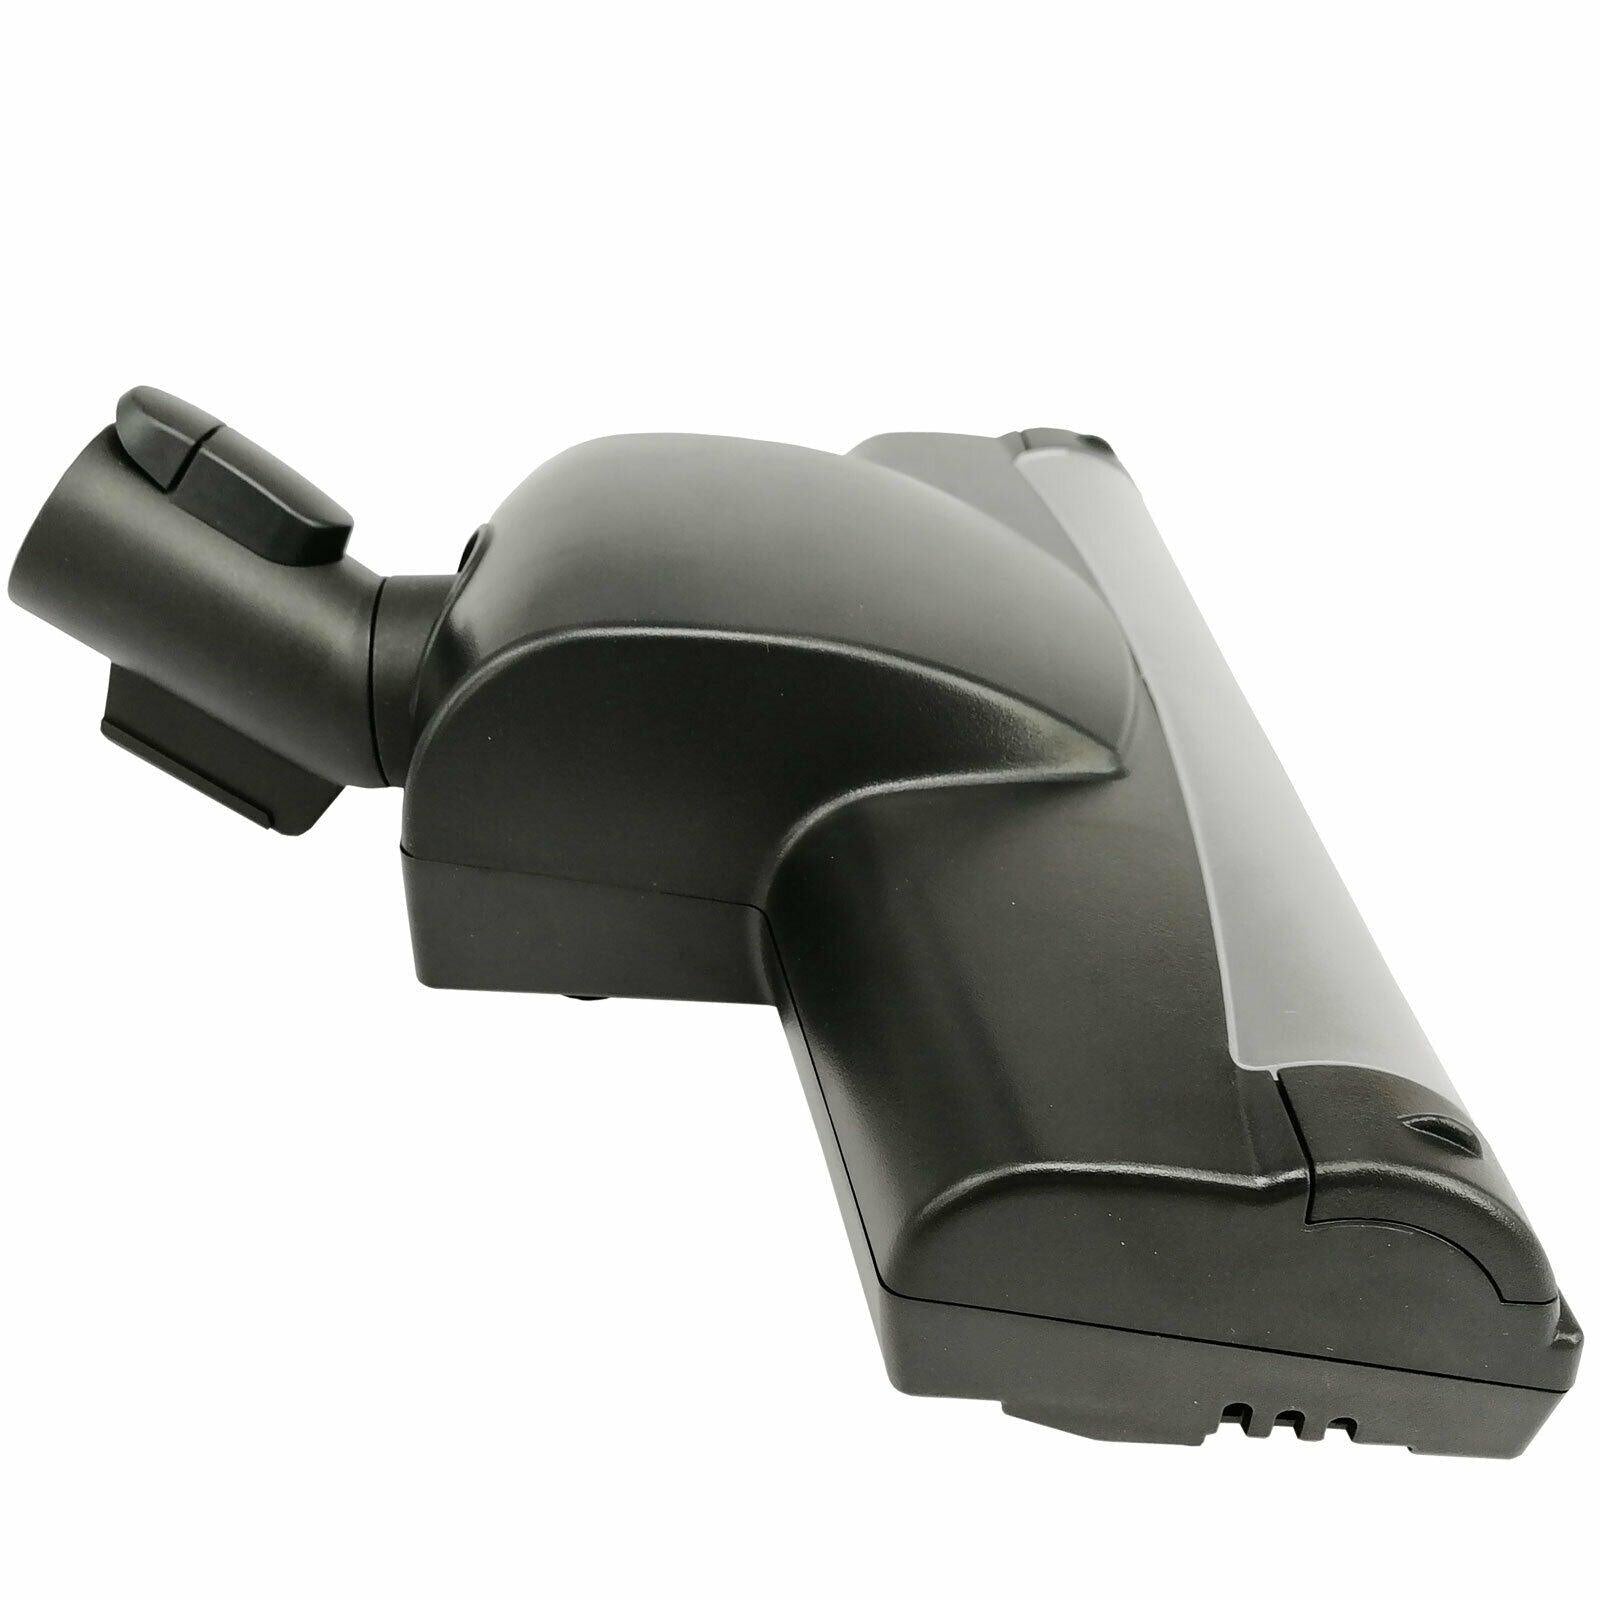 Vacuum Floor Tool Turbo Brush Head For Miele S5320 S5361 S8960 S8930 S8510 S700 Sparesbarn